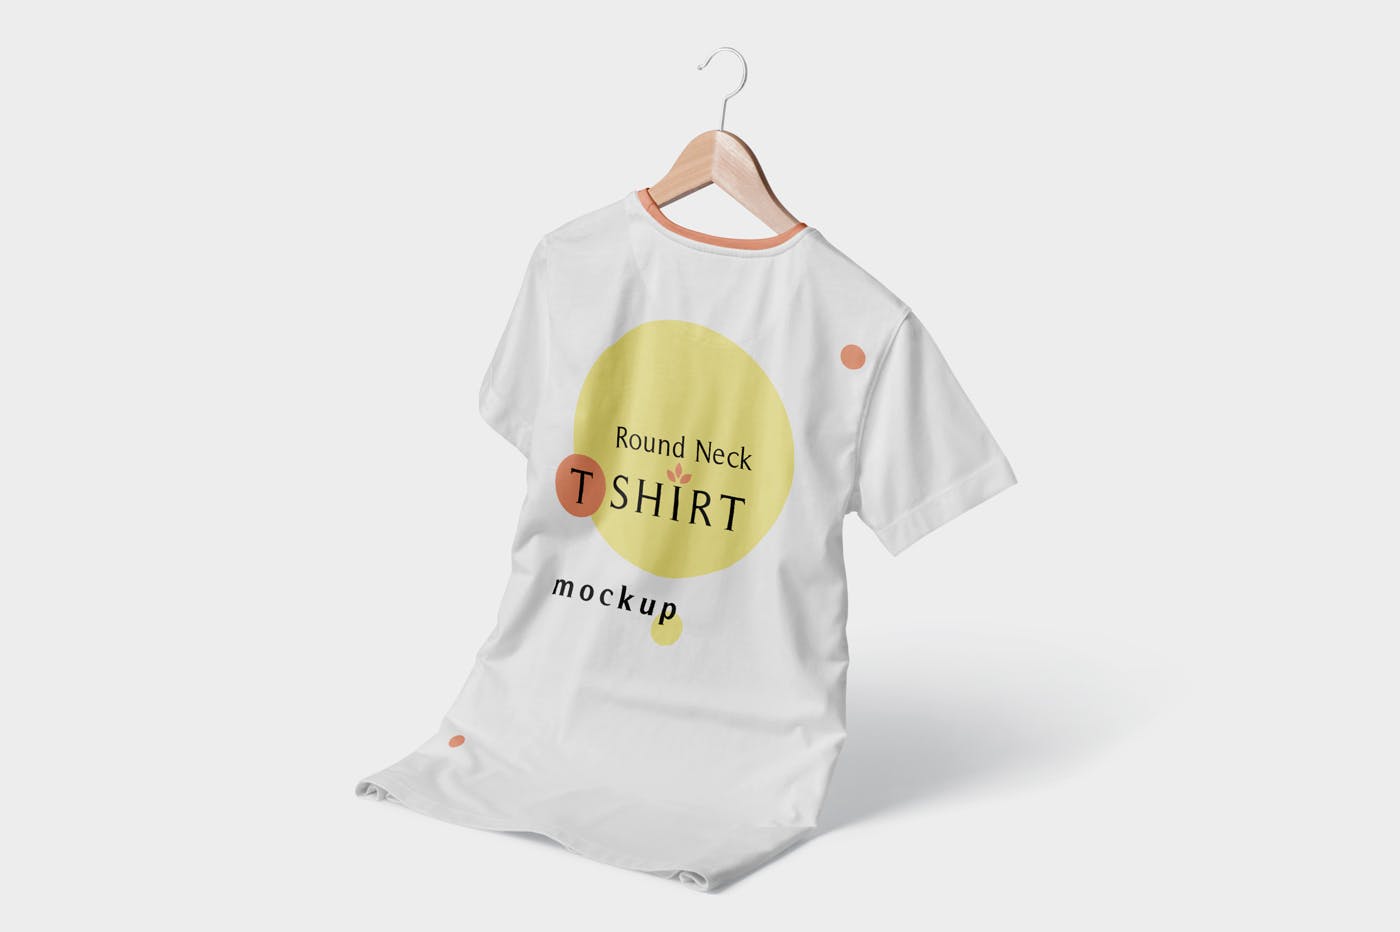 时尚圆领T恤印花设计效果图样机模板 Modish Round Neck T-Shirts Mockups插图(4)